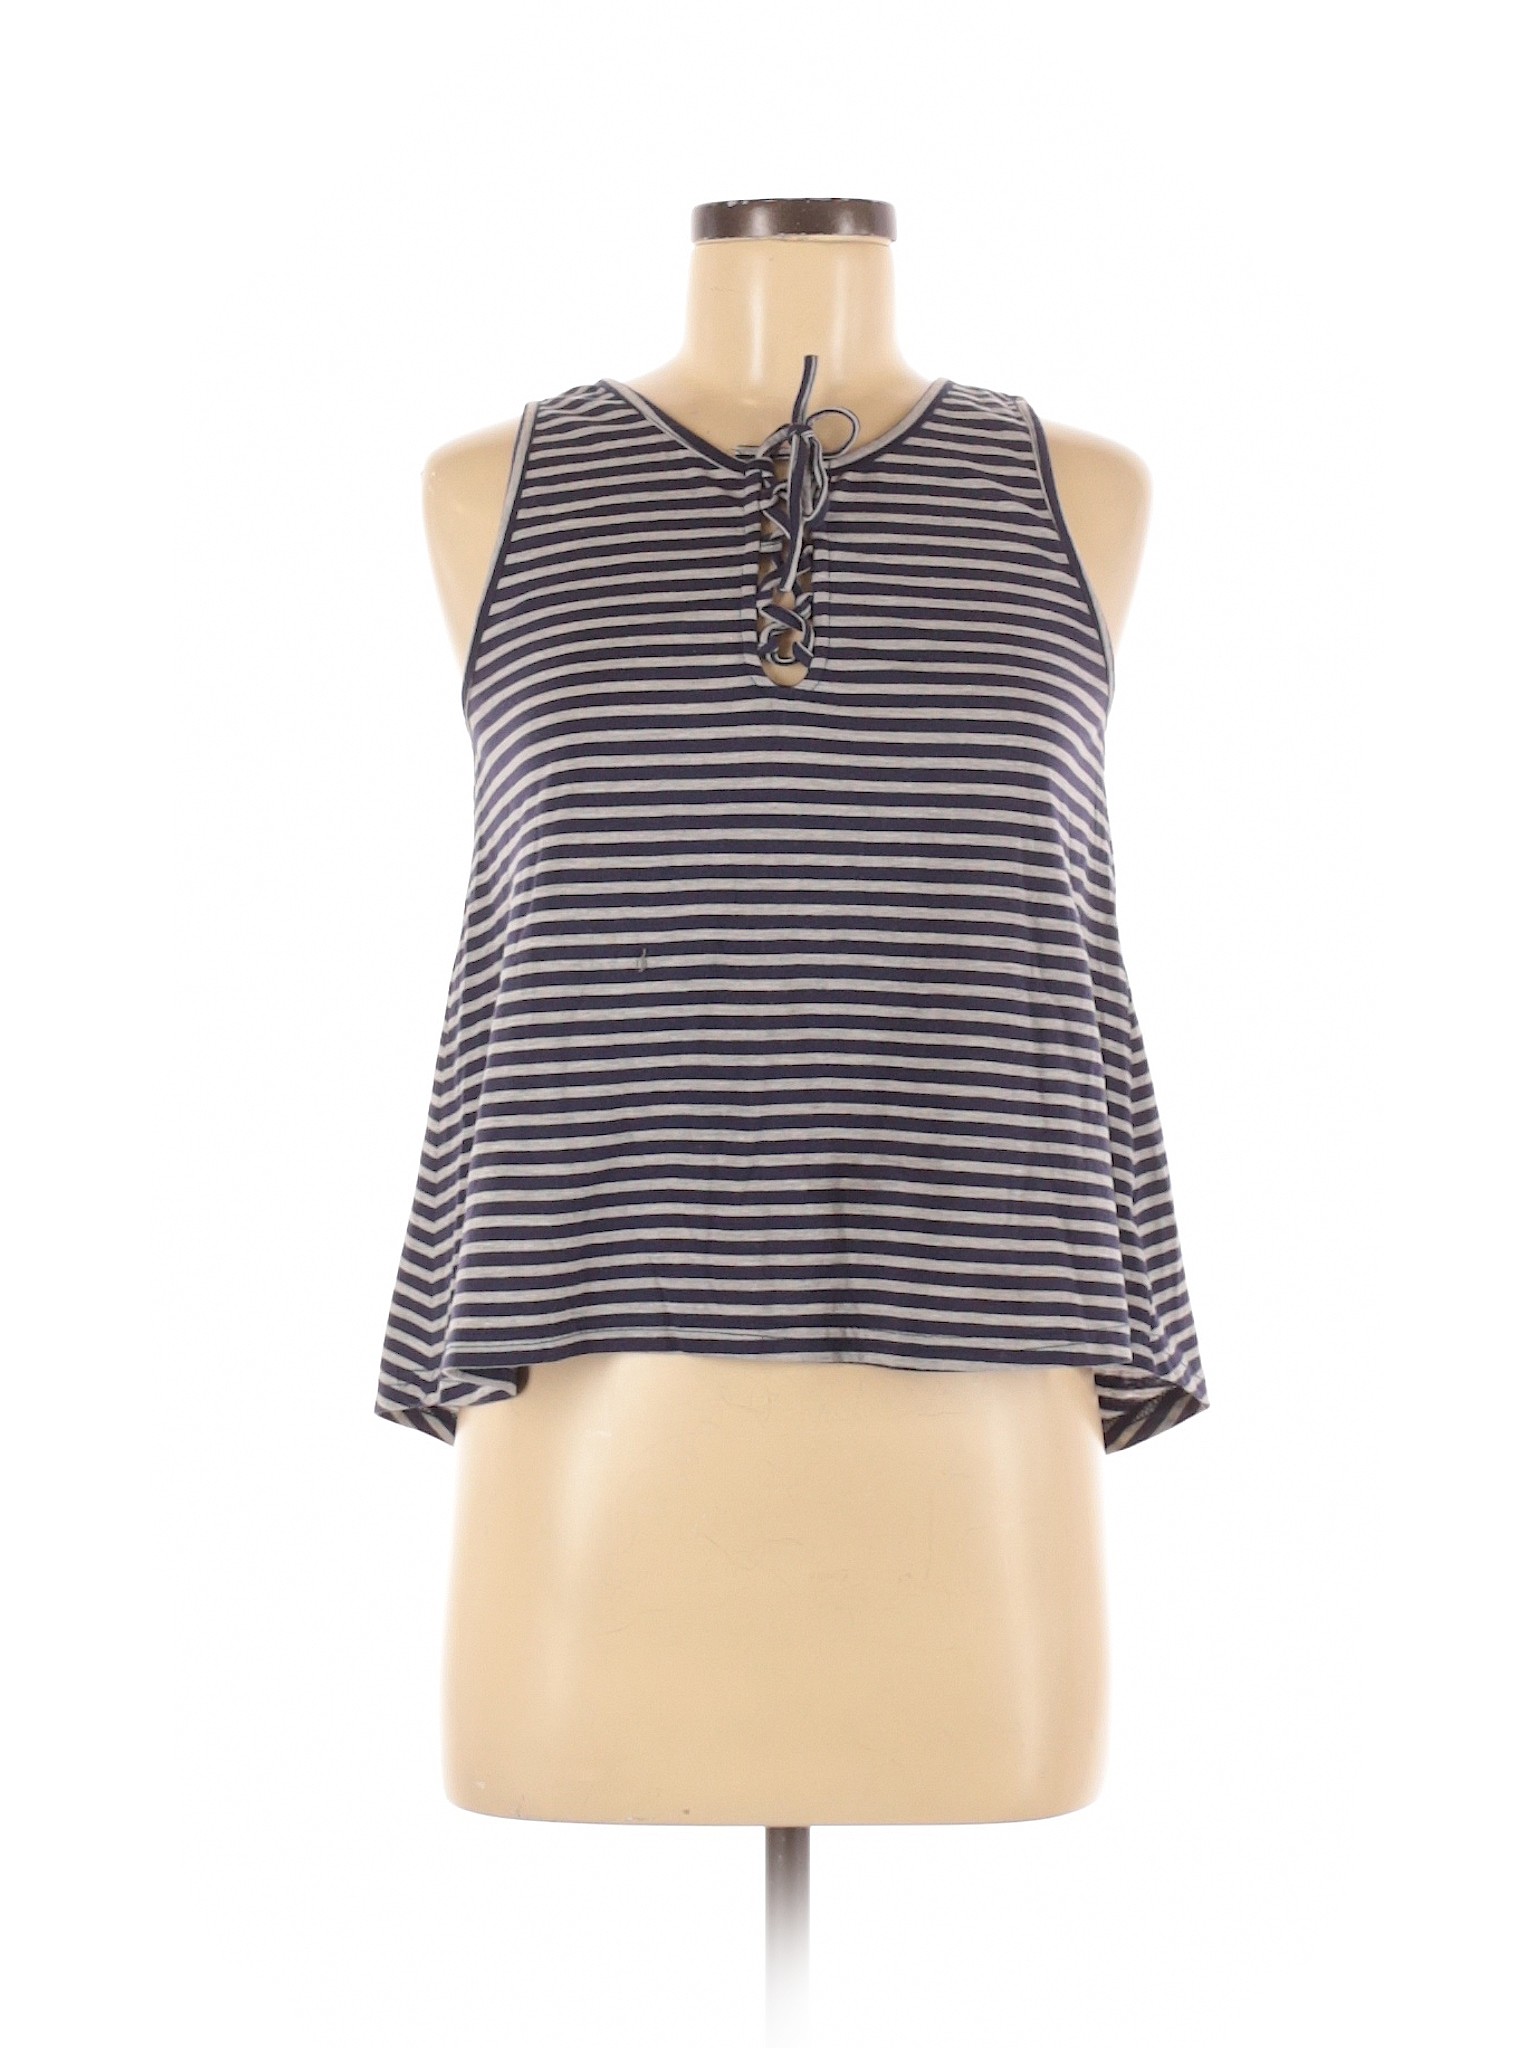 Ocean Drive Clothing Co. Women Blue Sleeveless Top M | eBay